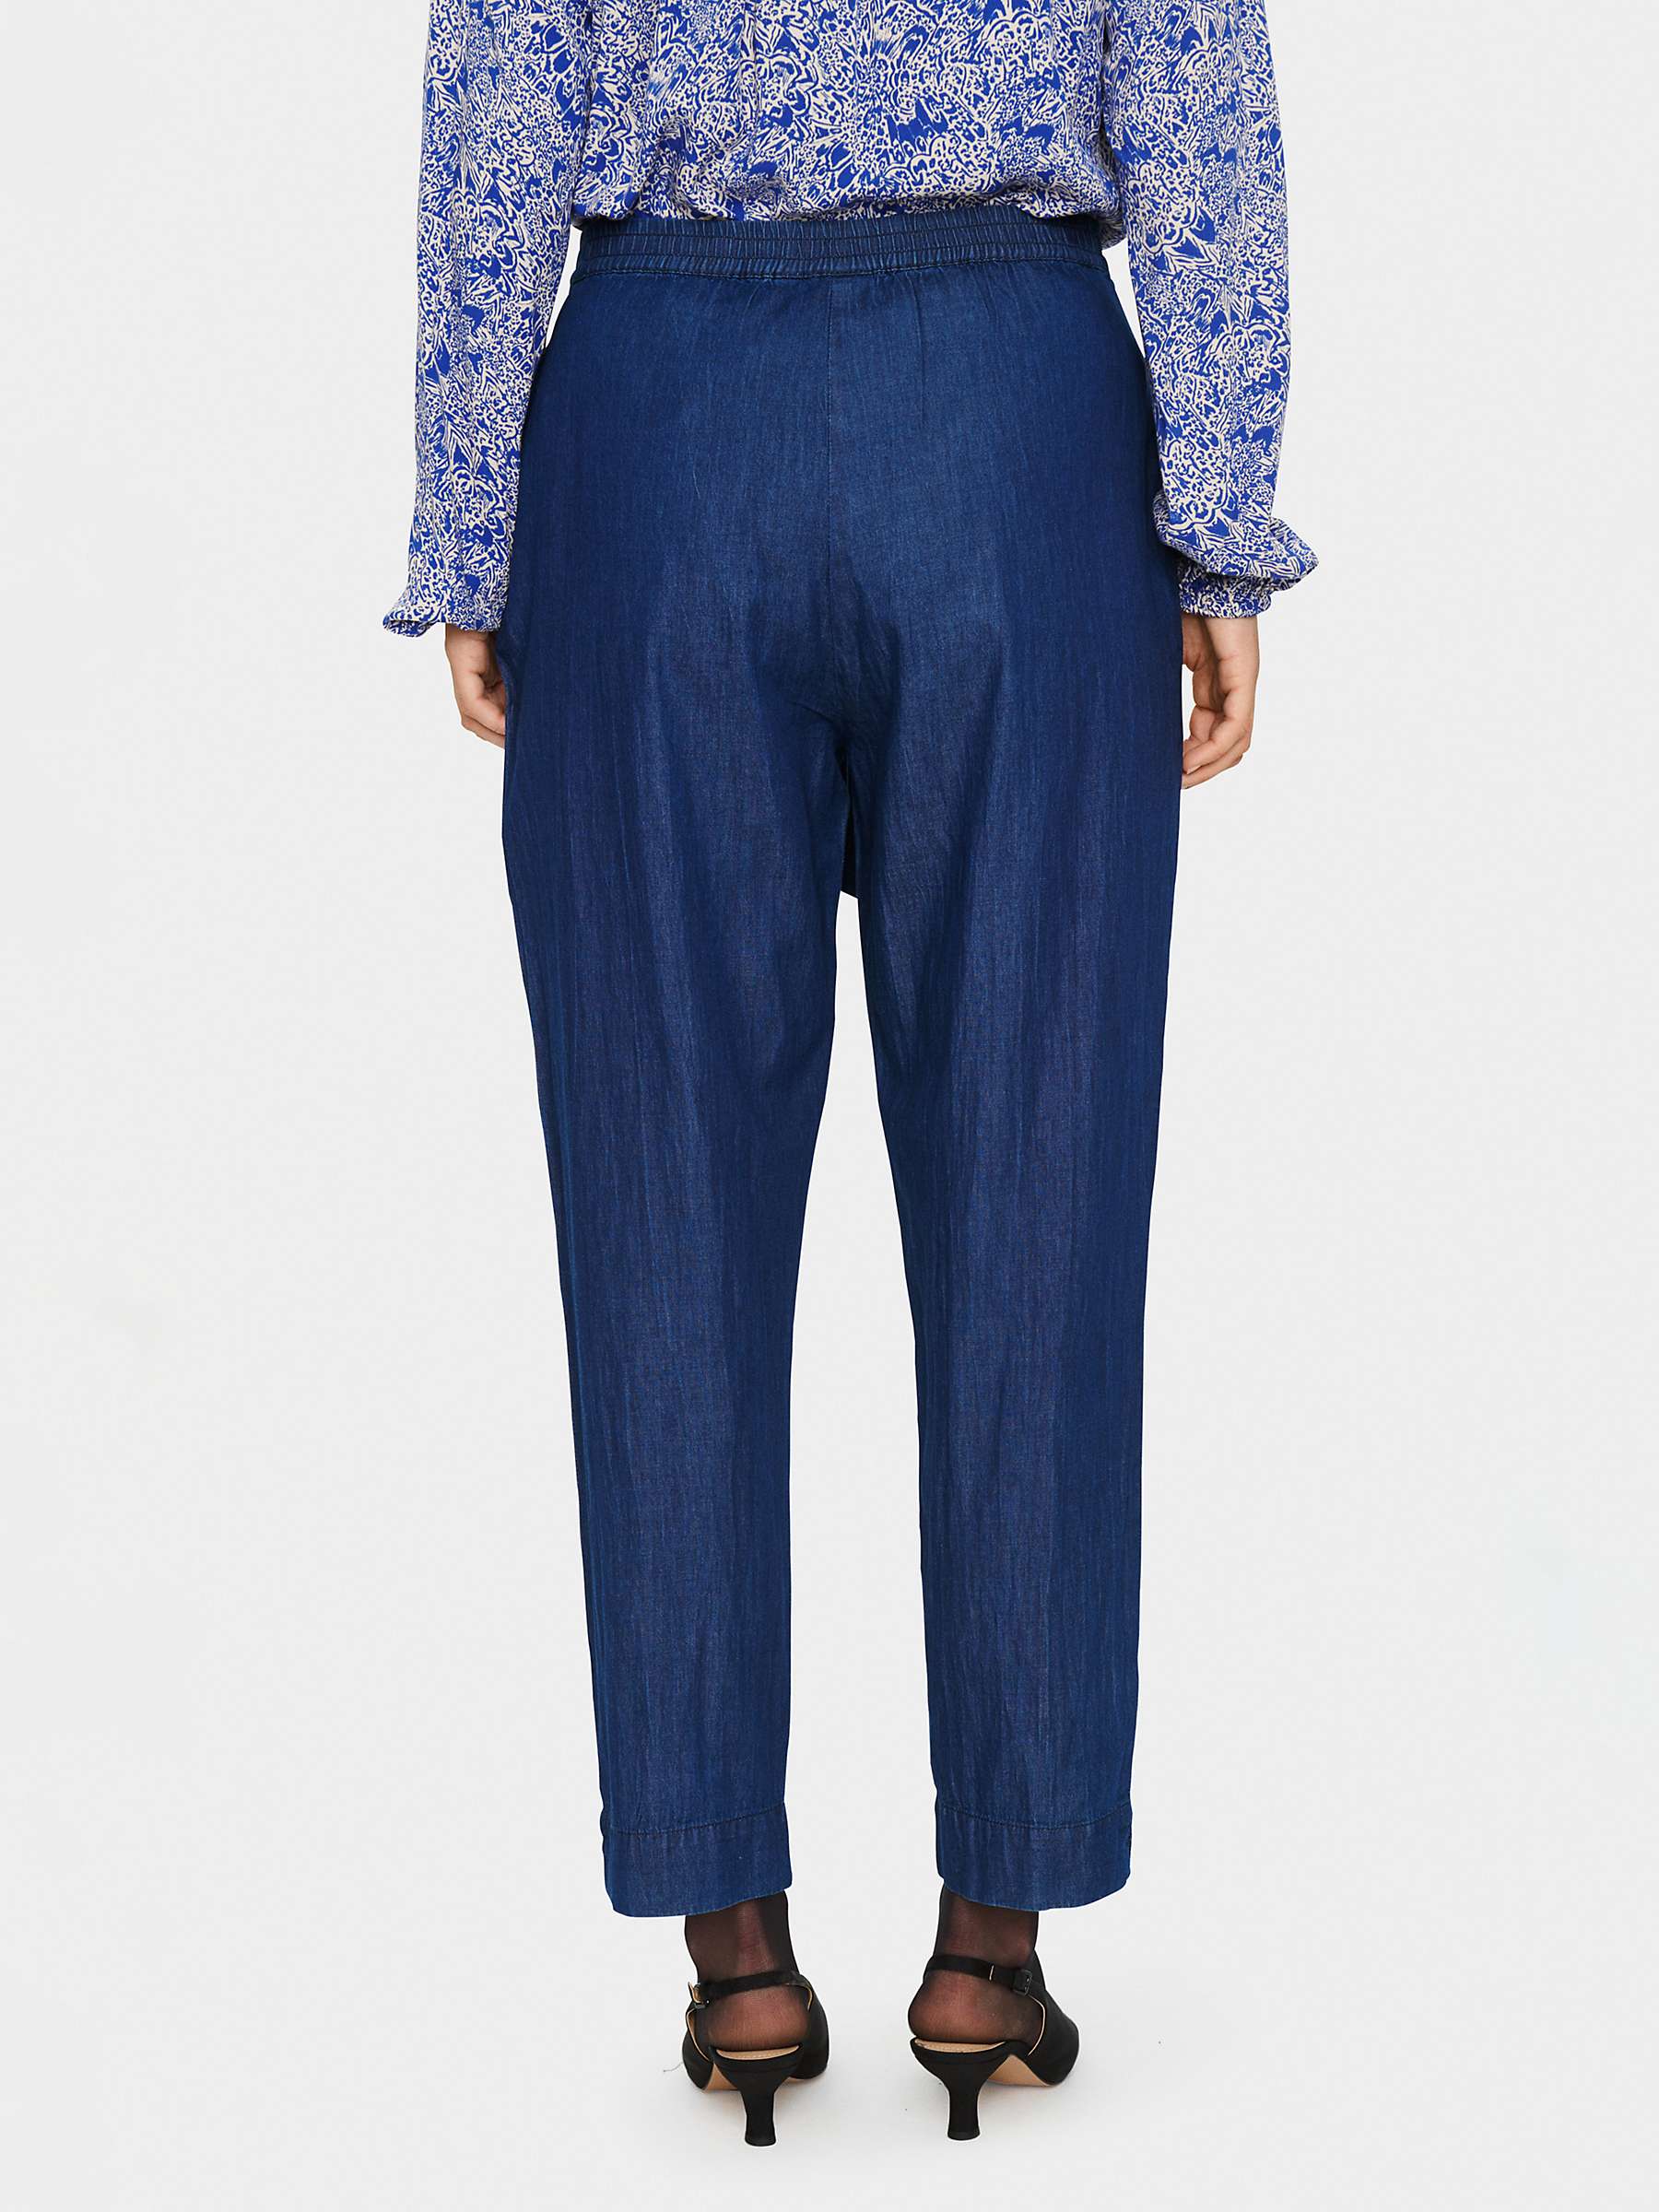 Buy Saint Tropez Shea Denim Trousers, Night Sky Online at johnlewis.com